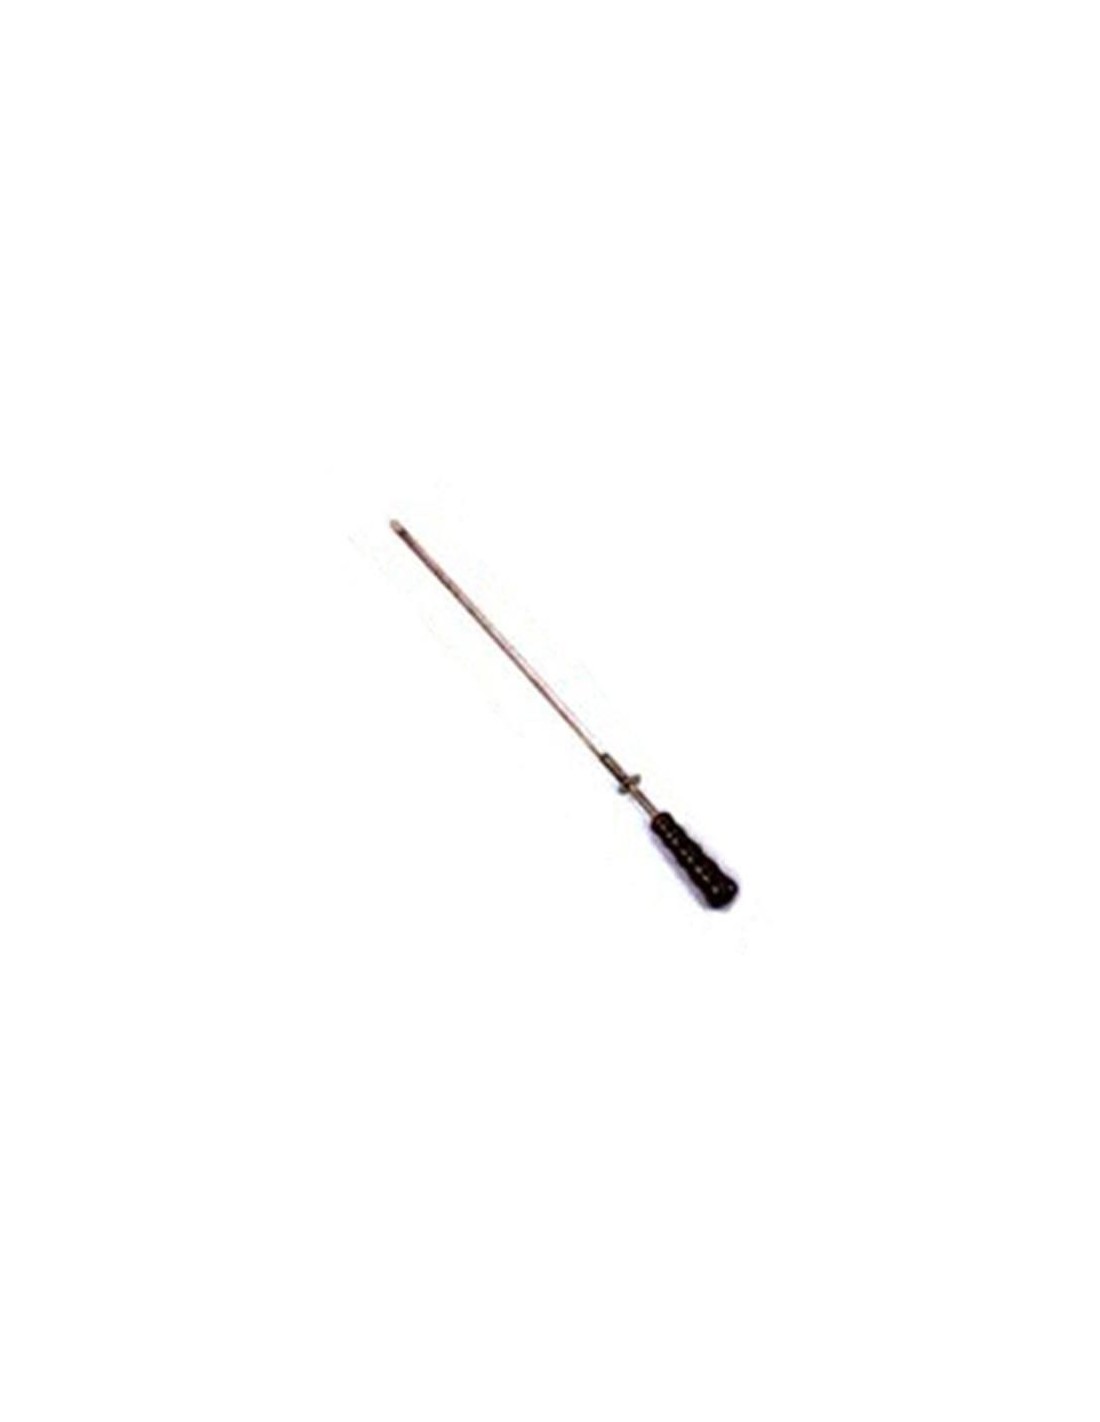 Sword 1 cm with athermic handle - Blade length 50 cm - Distance 5.5 cm - Handle length 6 cm